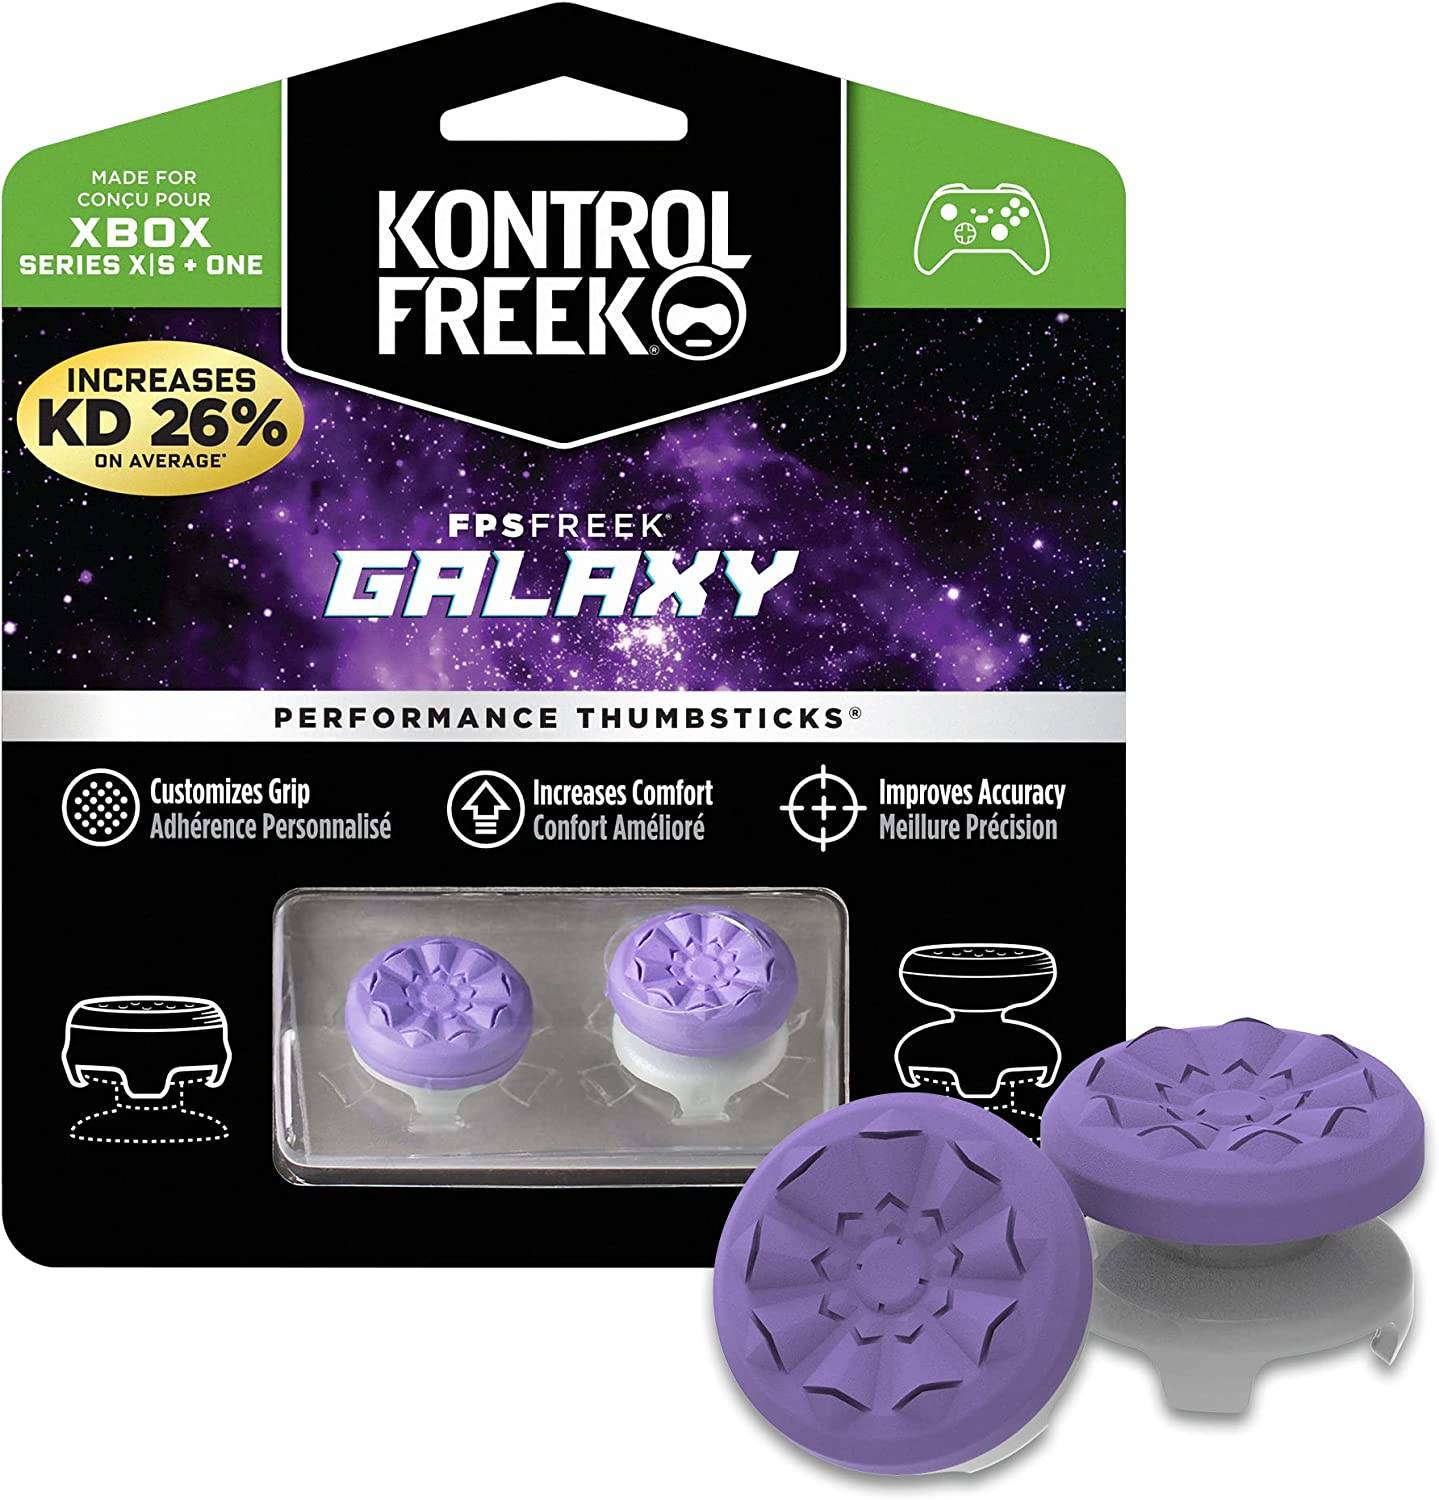 KontrolFreek FPS Freek and Galaxy Xbox Invastor - Performance Xbox Series X One Thumbsticks for